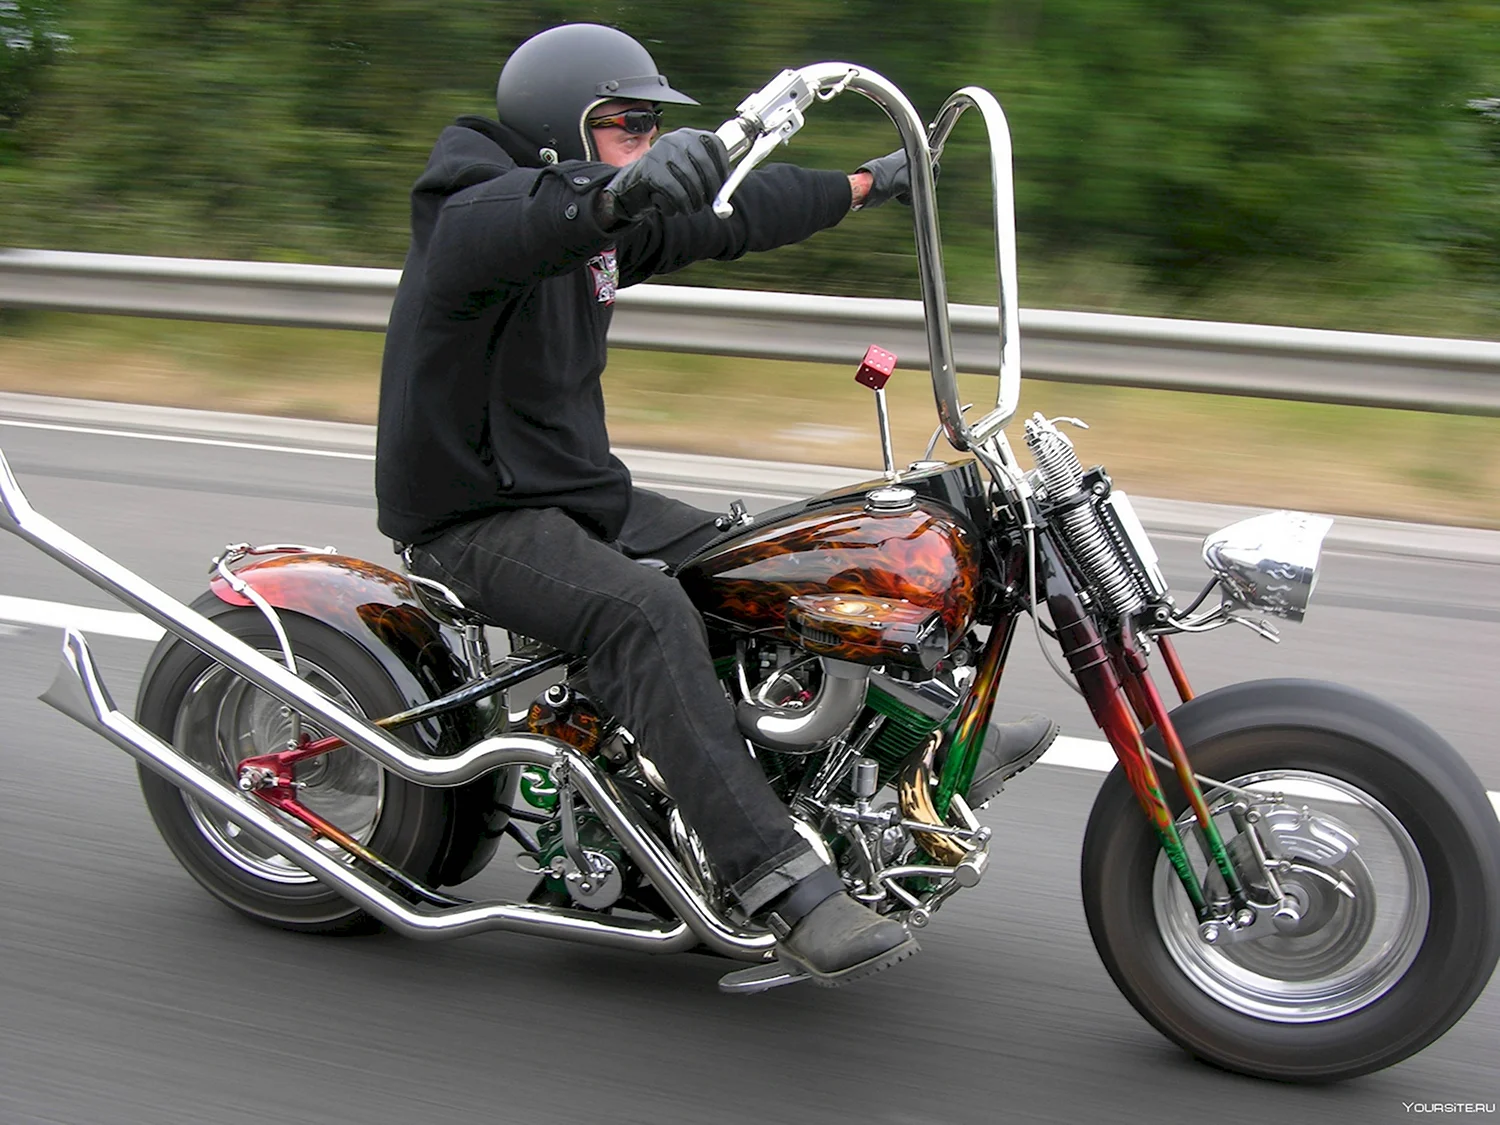 Мотоцикл Харлей Дэвидсон с высоким рулем